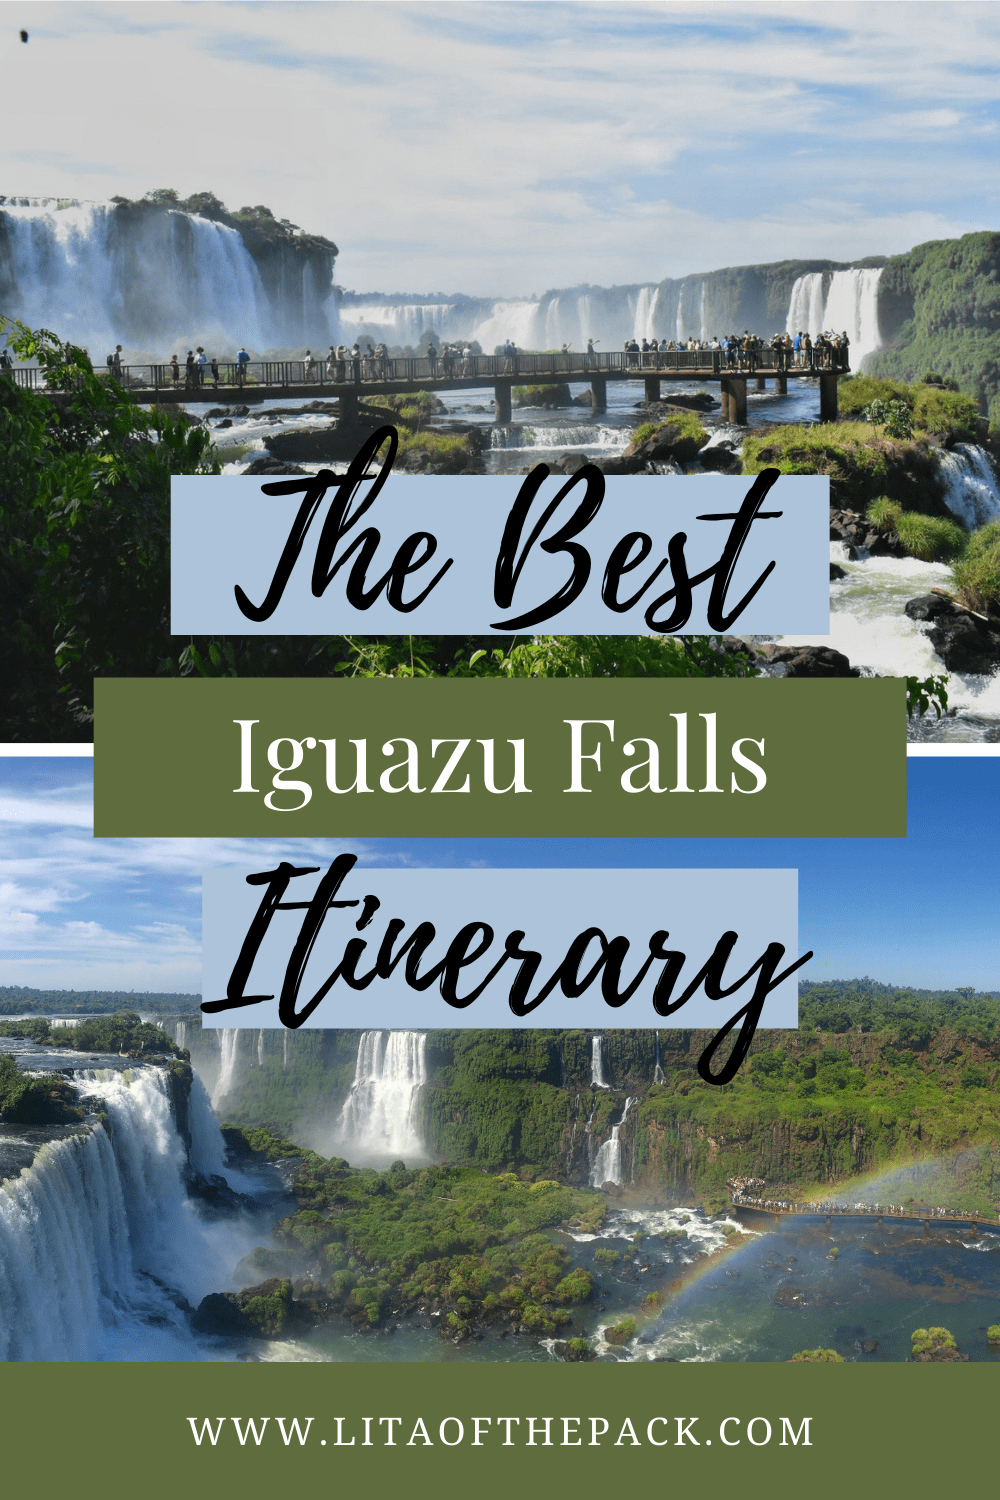 two panoramas of the Iguazu Falls